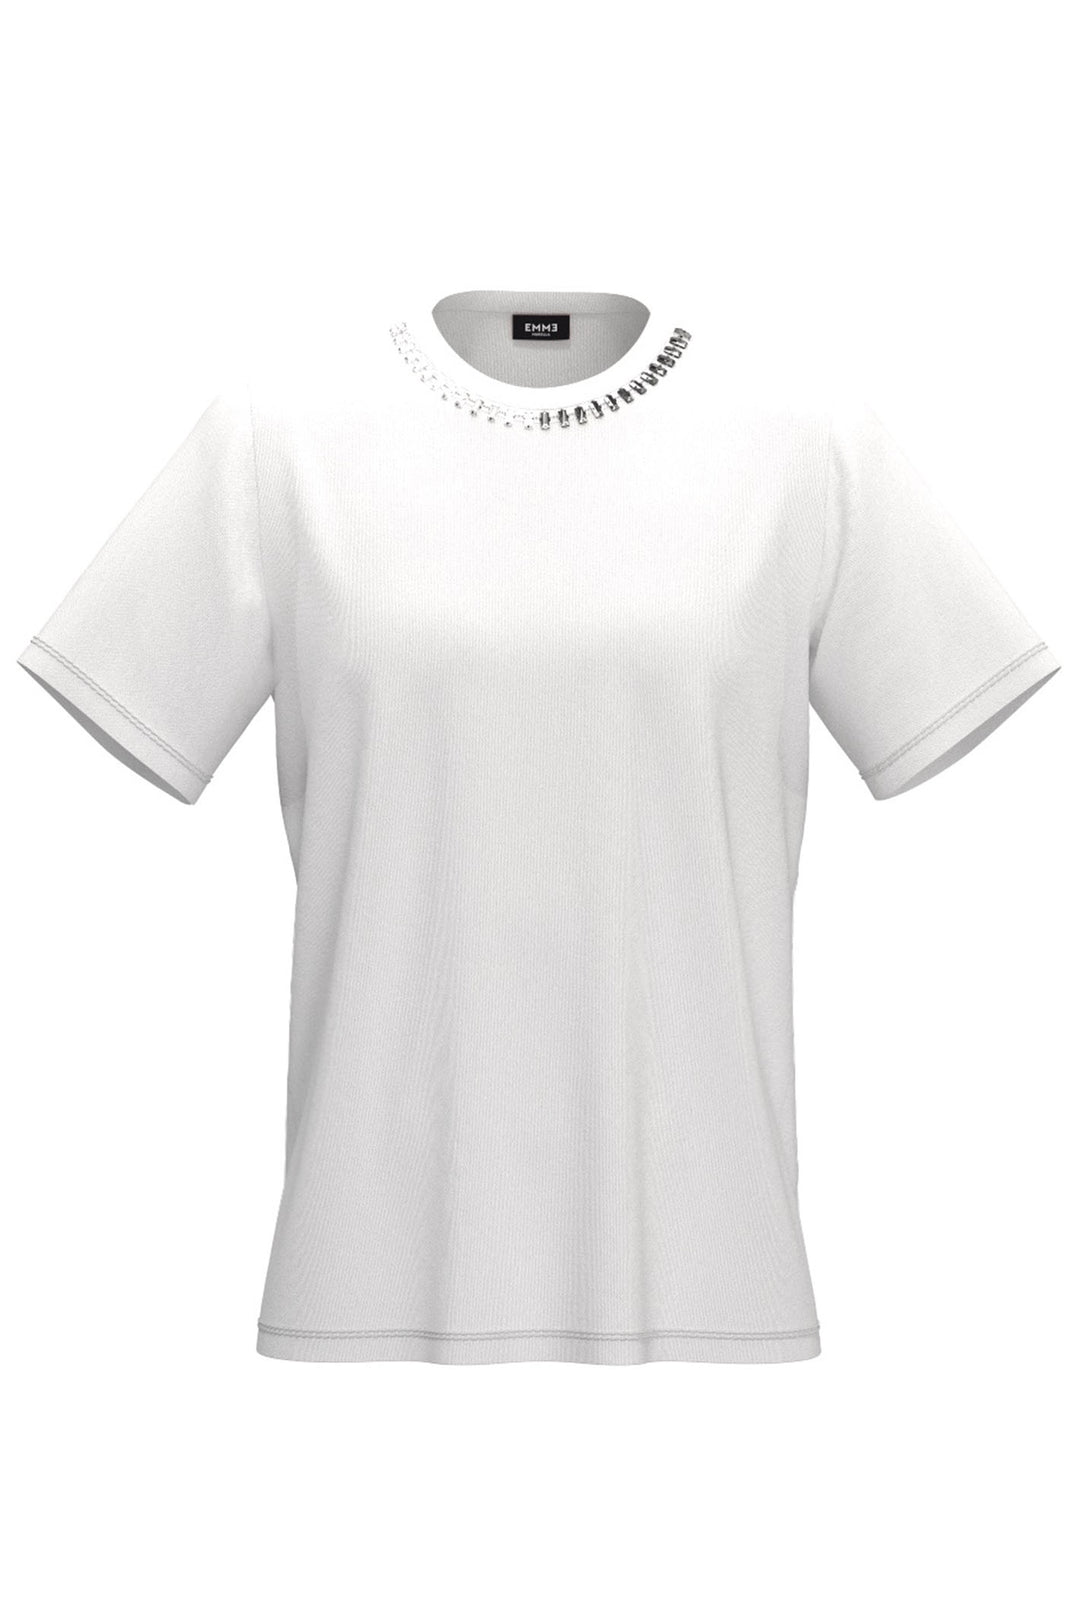 Emme Ordine 2415971052200 White T-Shirt - Olivia Grace Fashion